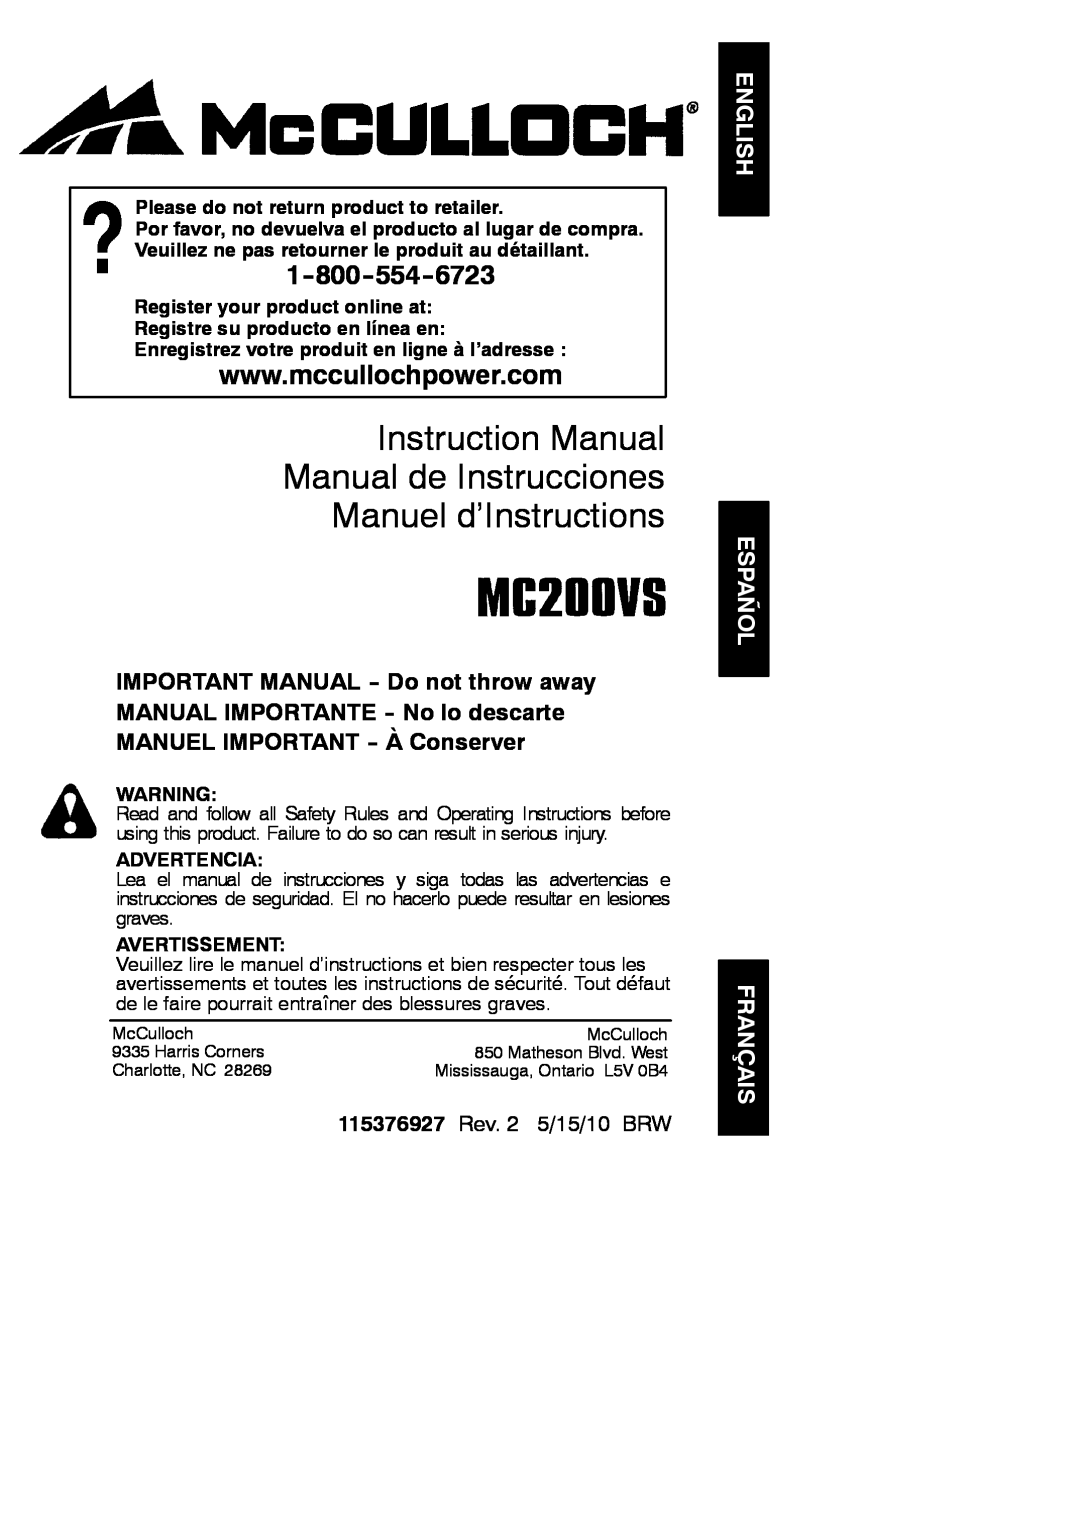 McCulloch MC200VS instruction manual English Español Français, 115376927 Rev. 2 5/15/10 BRW, Advertencia, Avertissement 